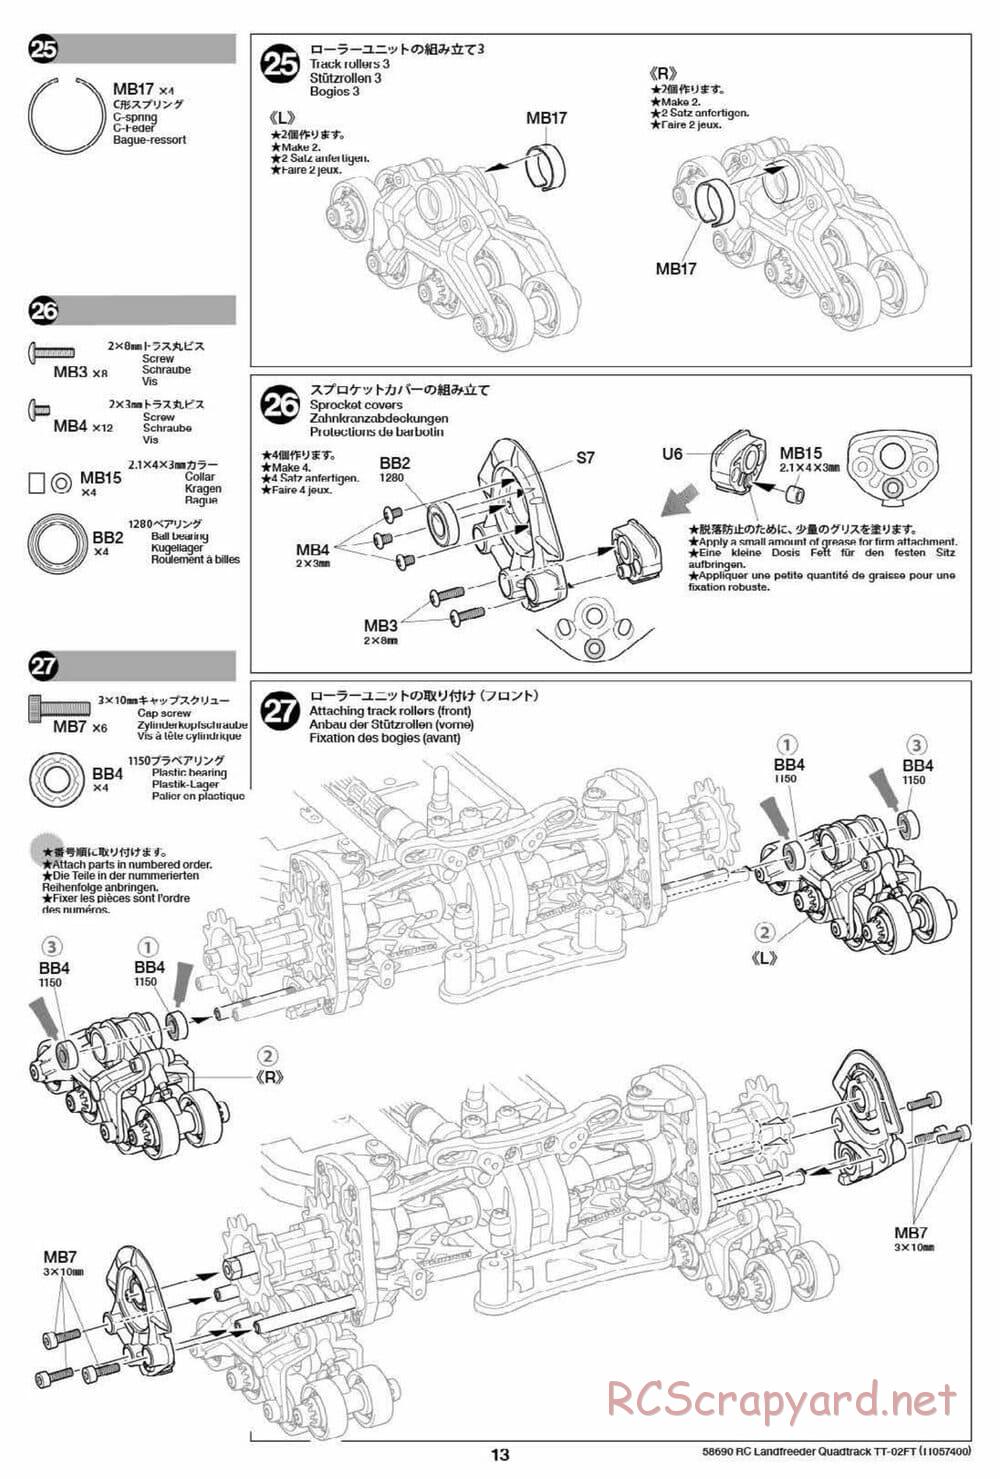 Tamiya - Landfreeder Quadtrack - TT-02FT Chassis - Manual - Page 13